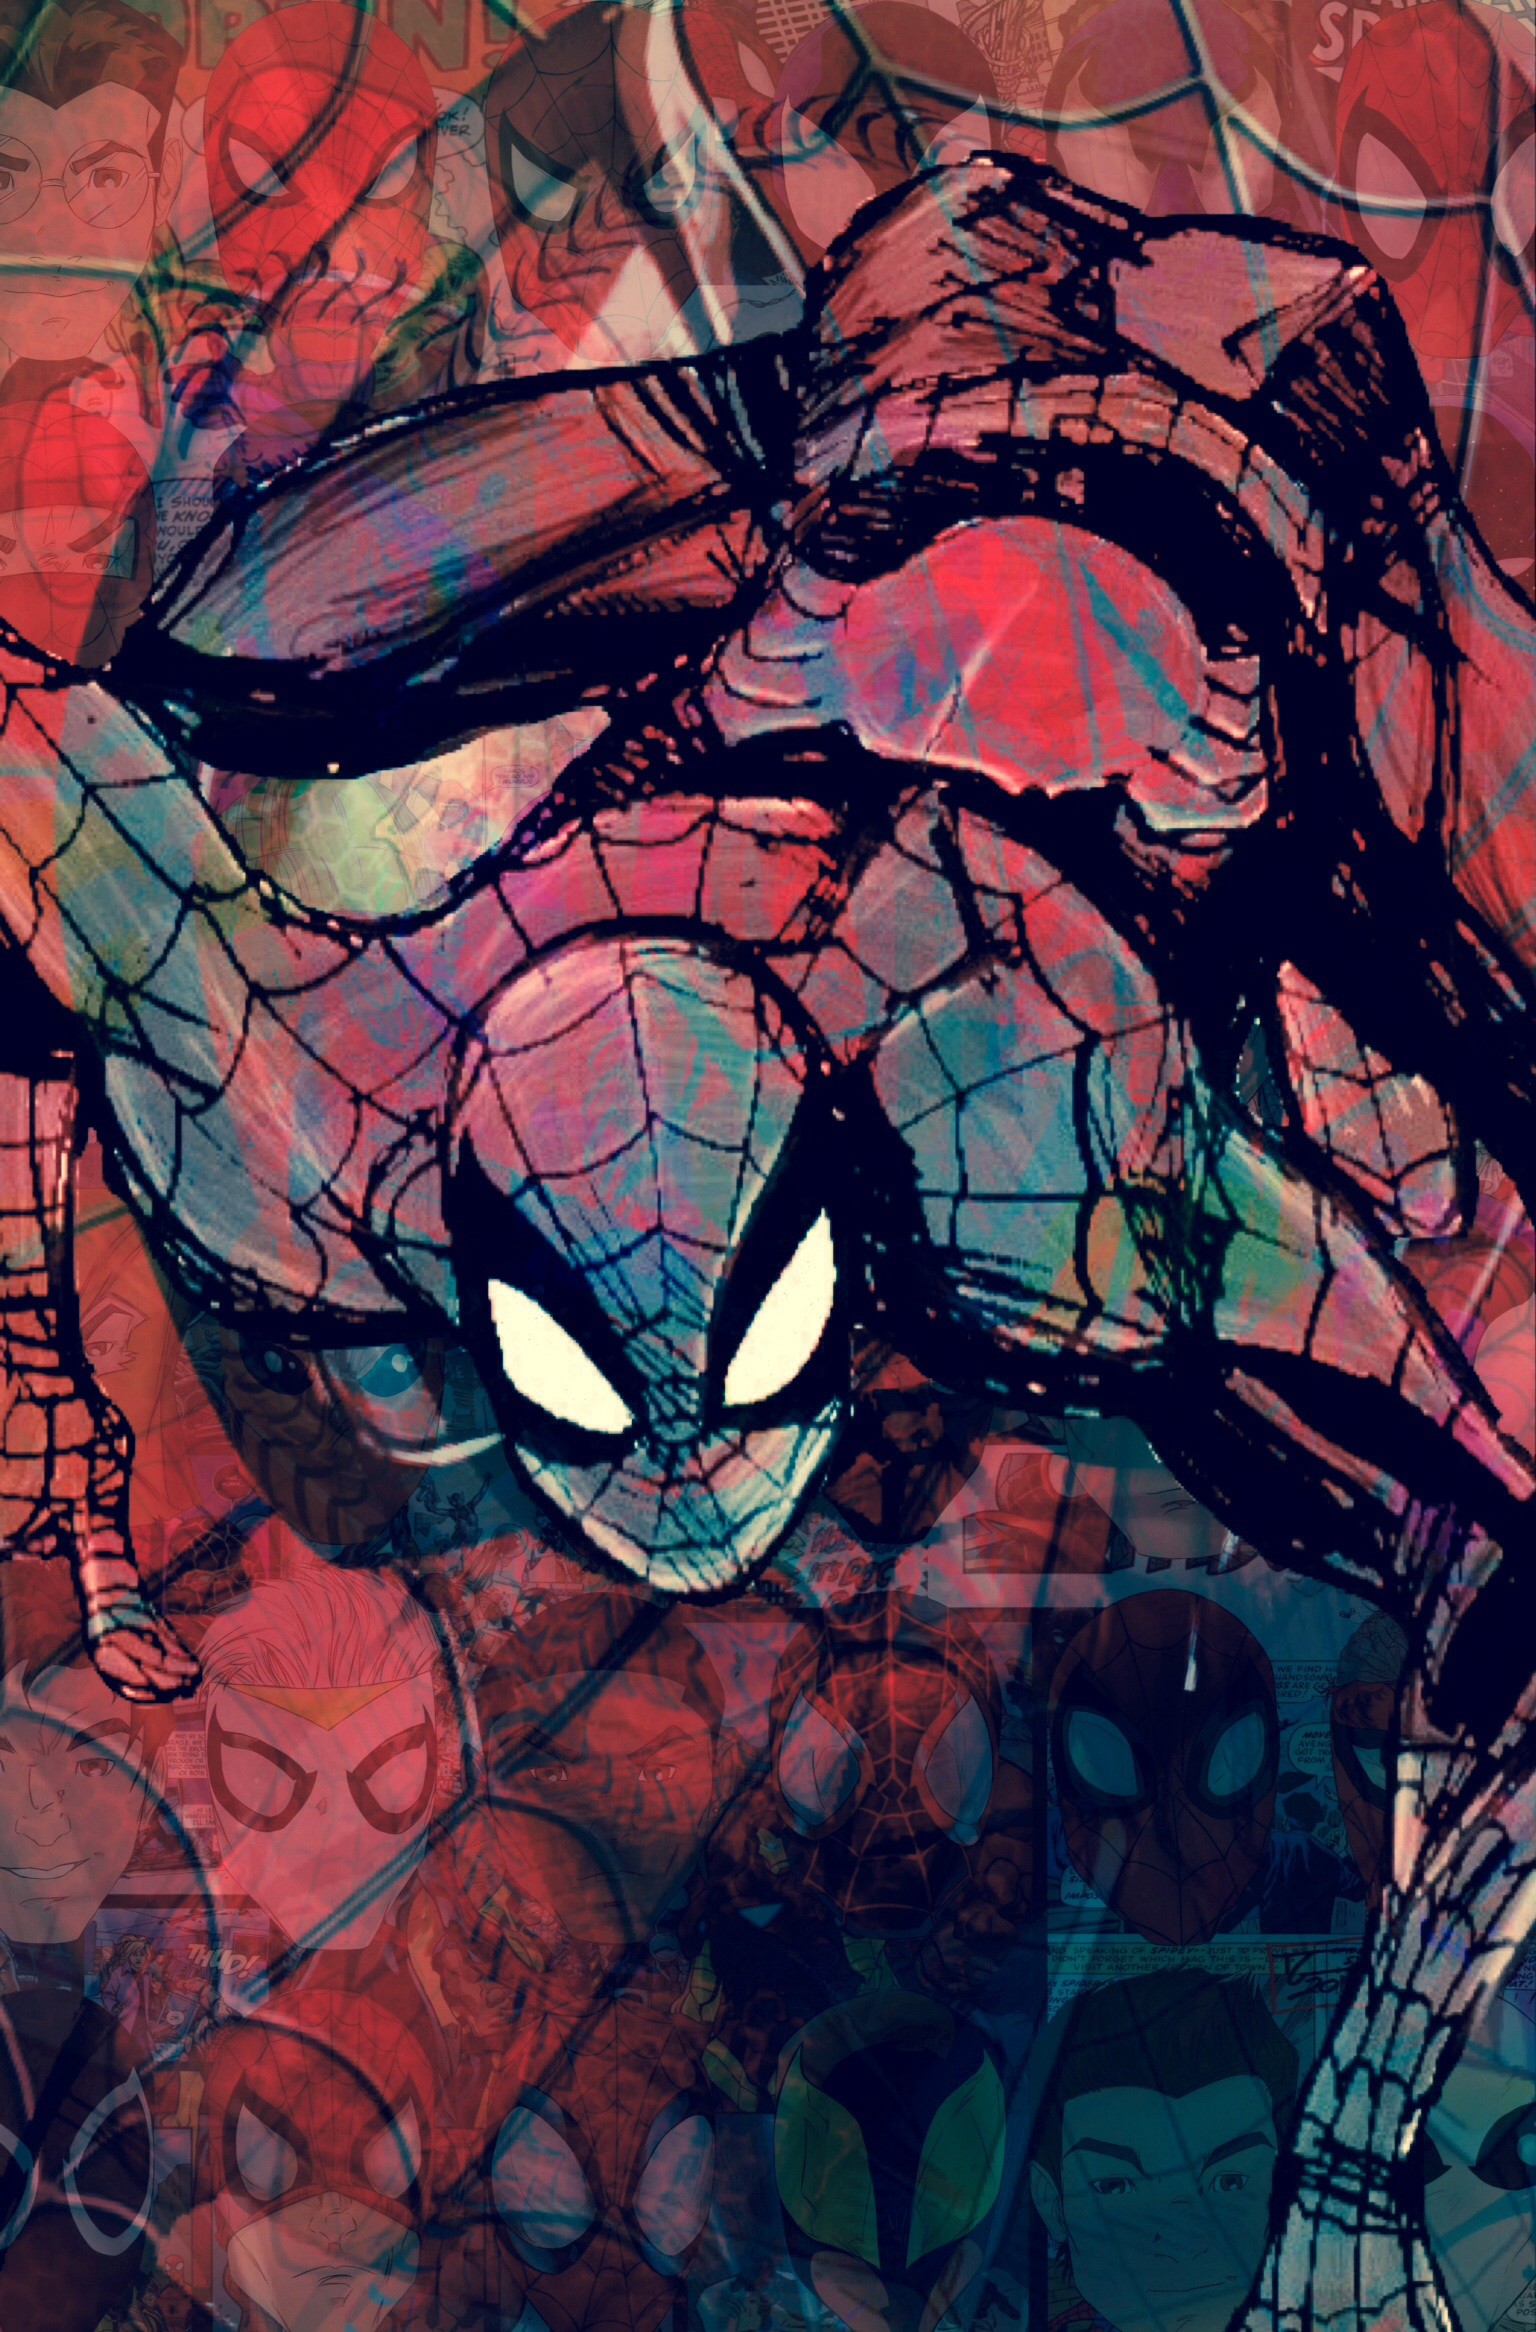 Spiderman IOS Wallpaper by Joey GB 316